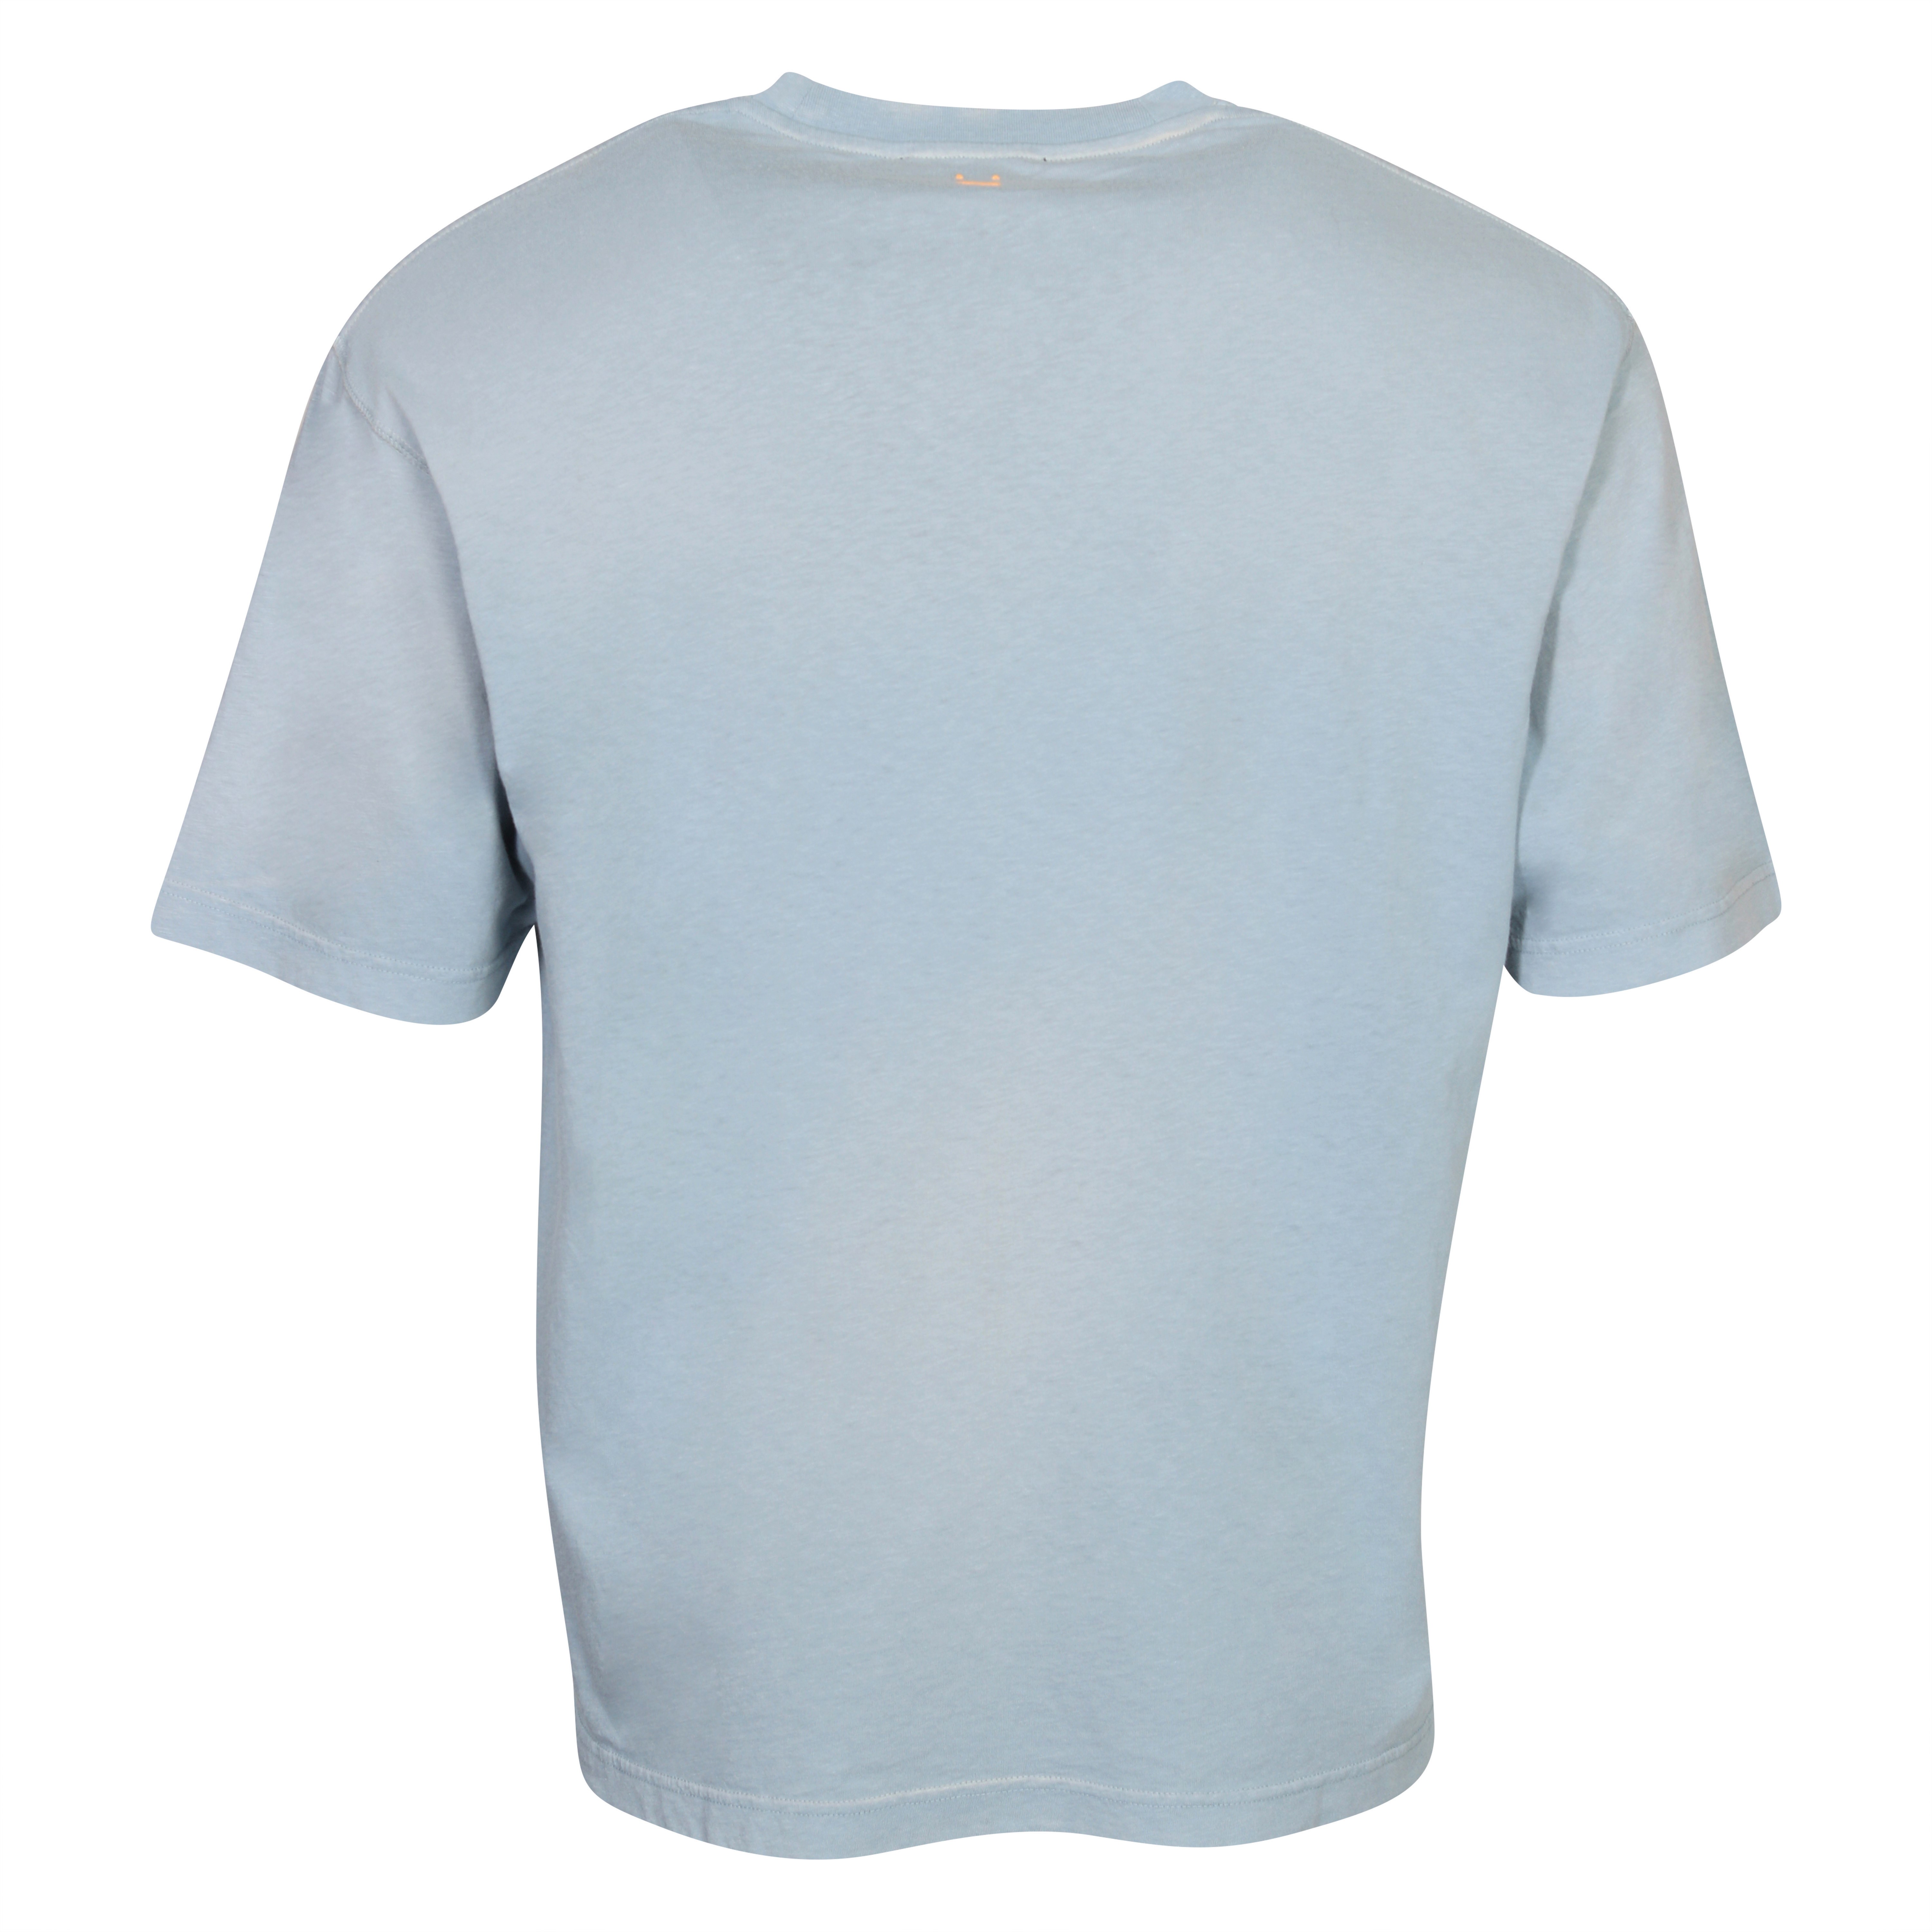 Acne Studios Face T-Shirt in Dusty Blue